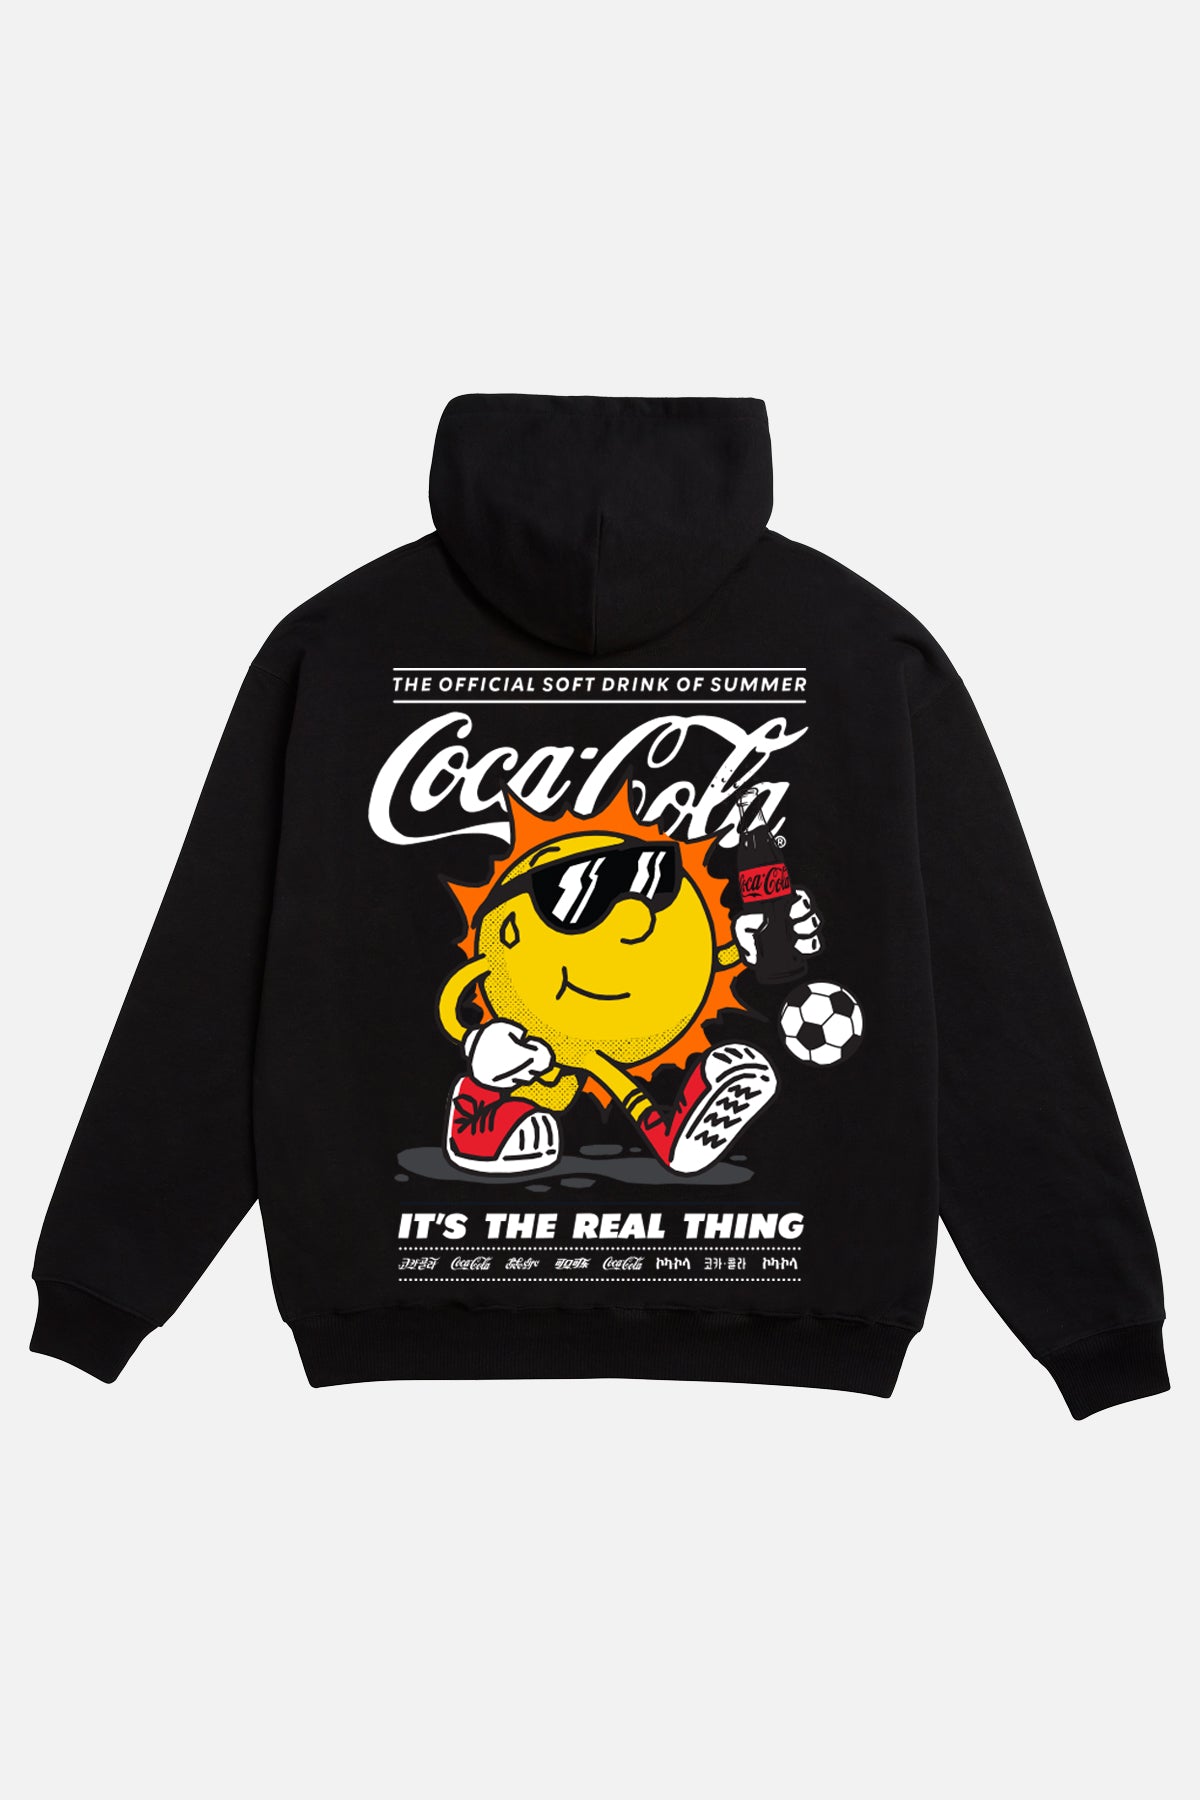 Coca-Cola Saturday Mascot Hoodie in Black